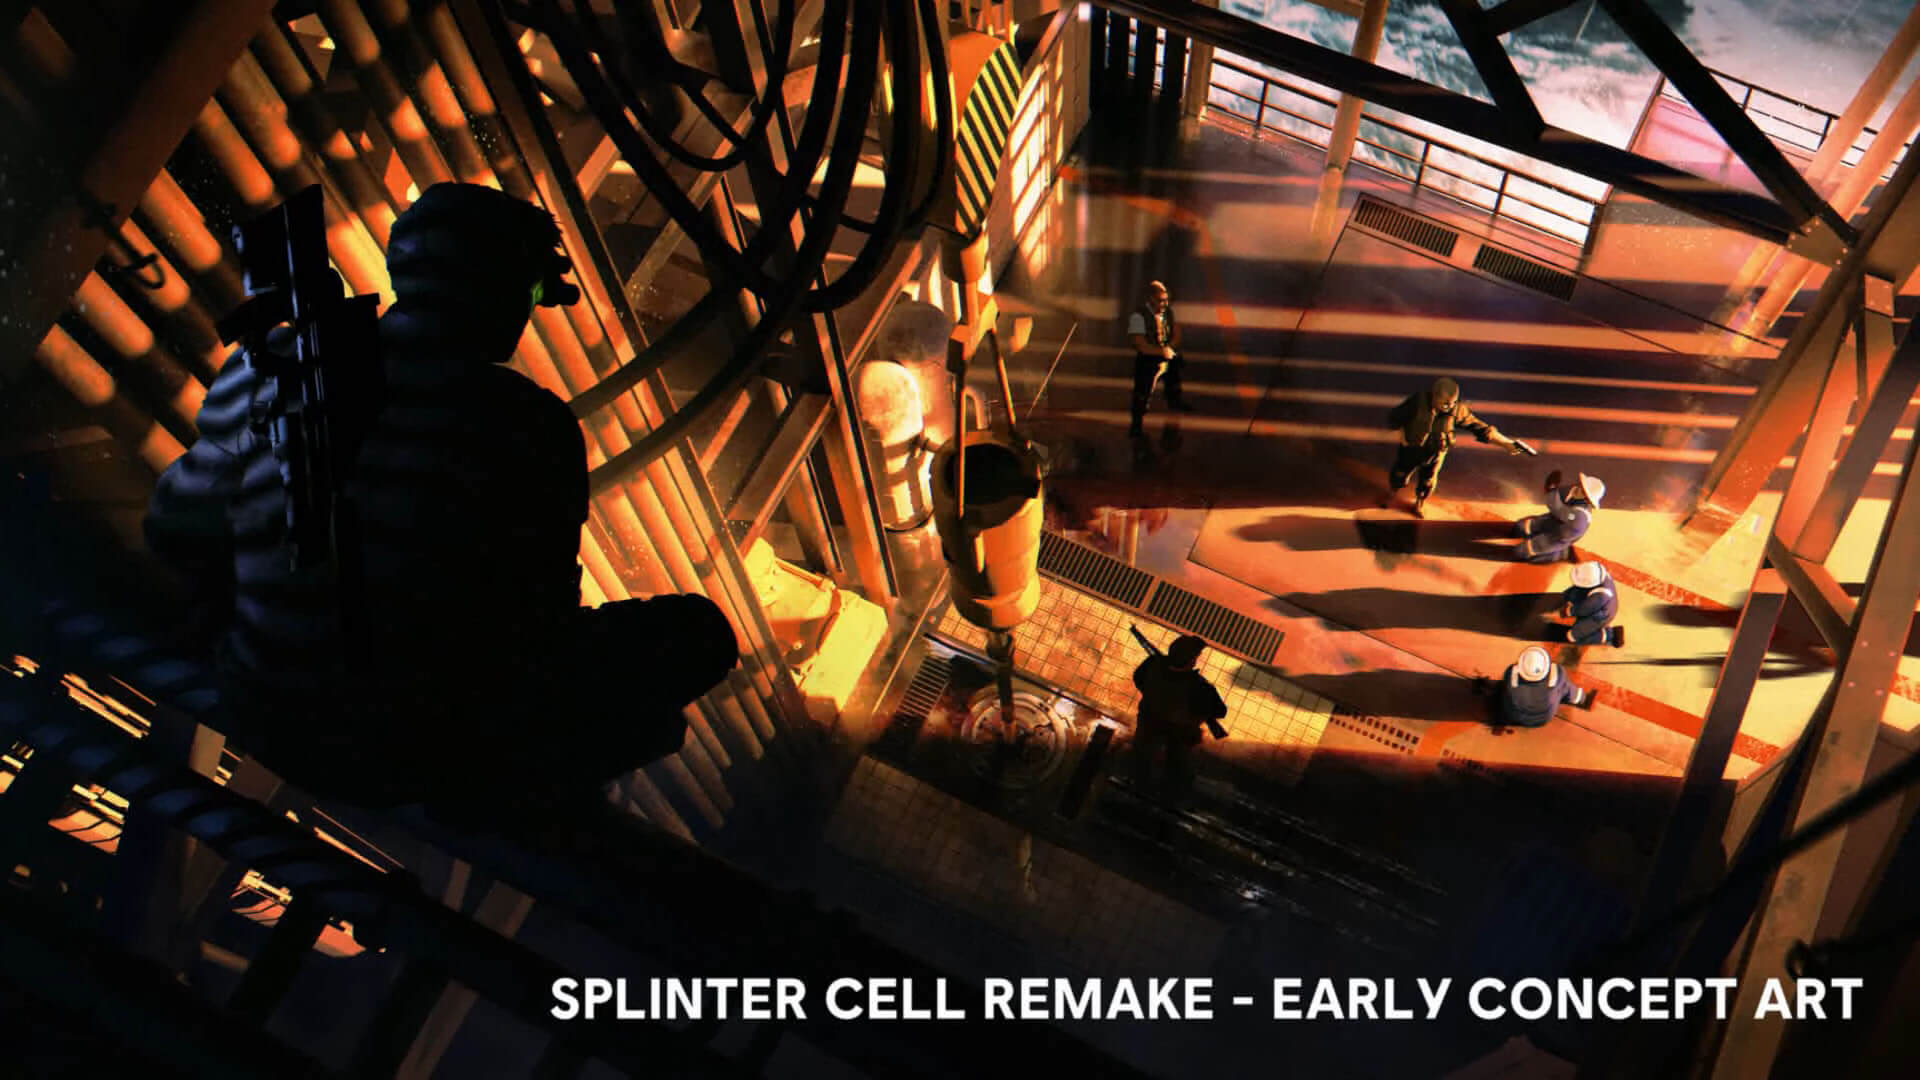 Splinter-Cell-Remake-concept-art-2.jpg